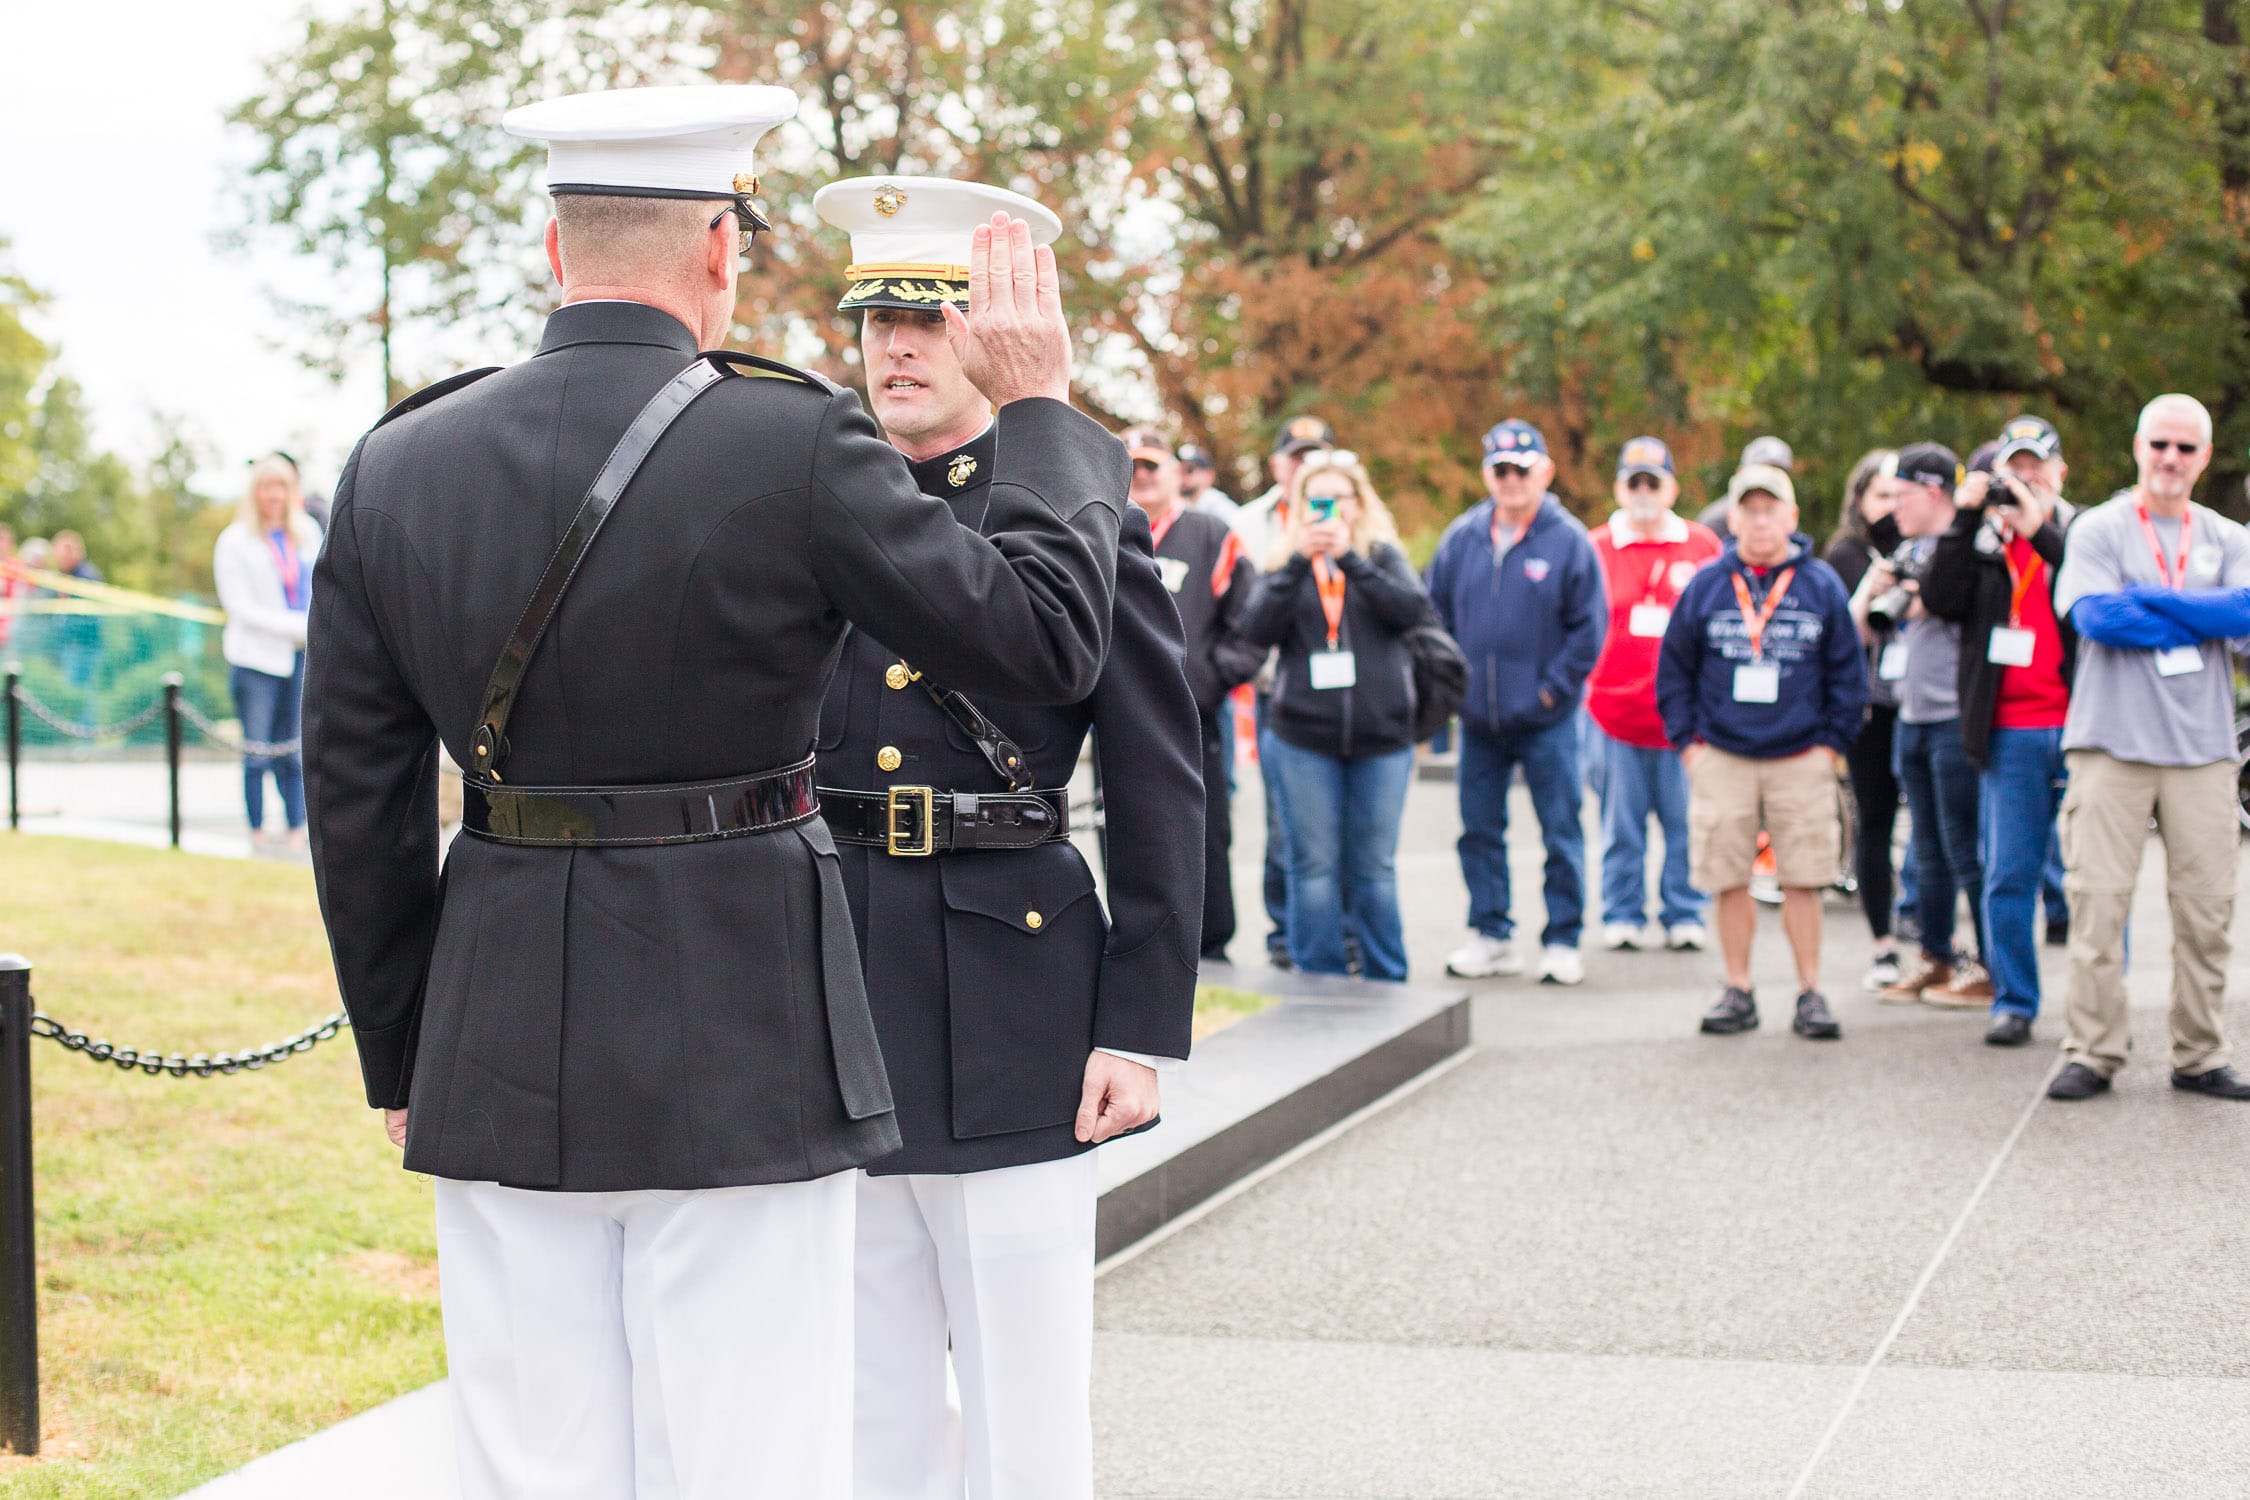 Marine Corps Promotion pinning ceremony at US Marine Corps War Memorial Iwo Jima Washington, DC by Alison Bell, Photographer.